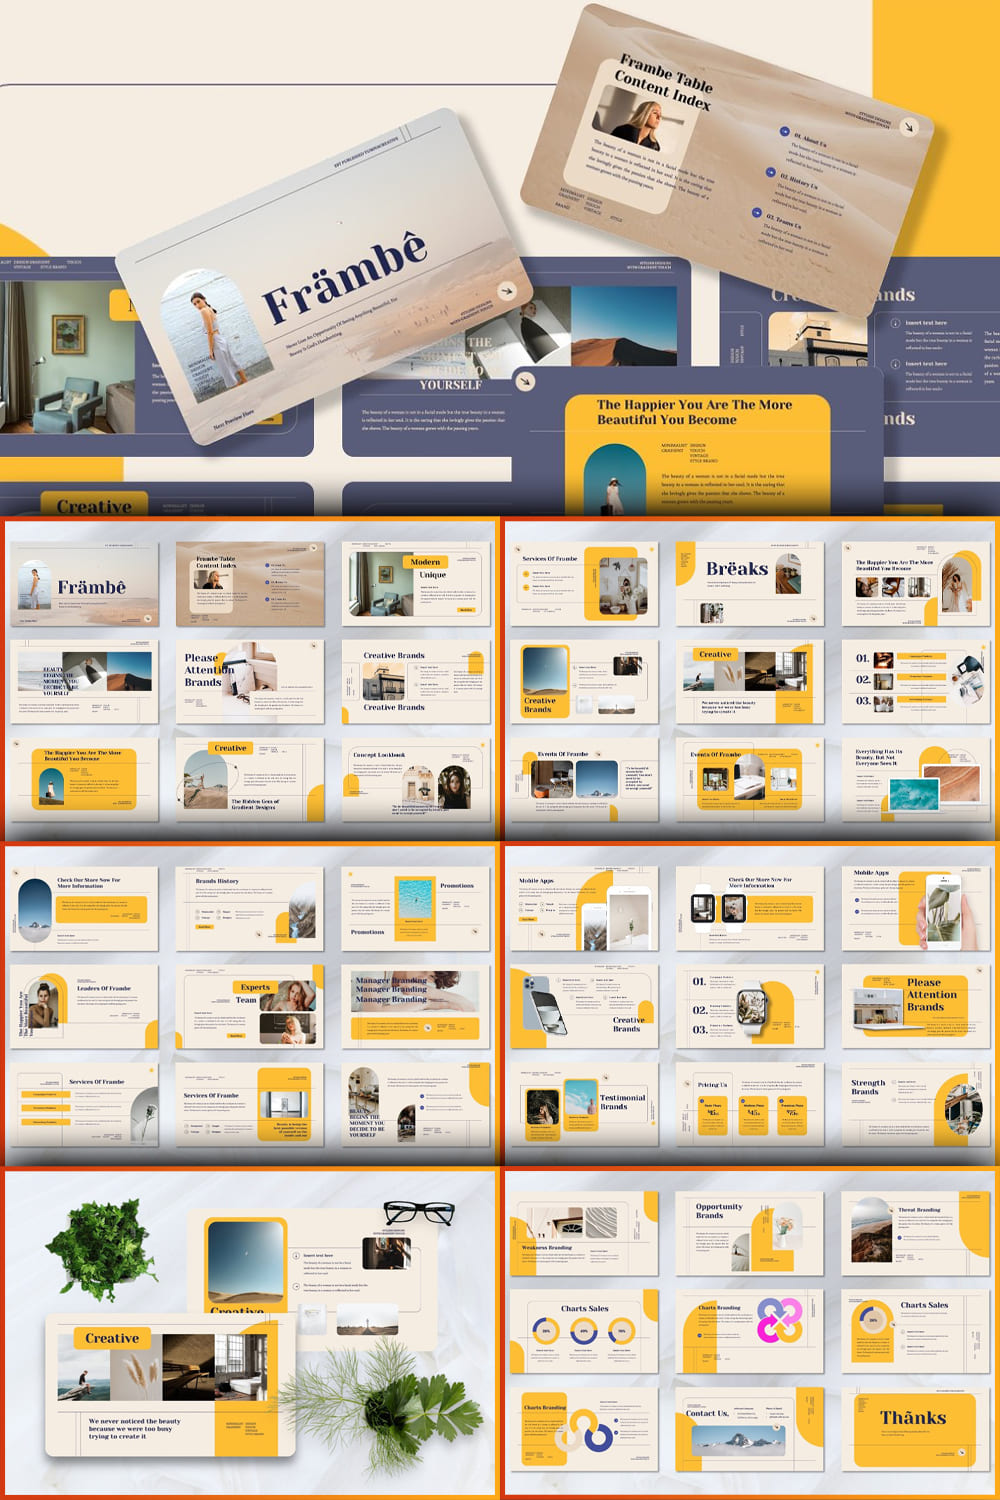 Frambe - Creative Brands Google Slide pinterest image preview.